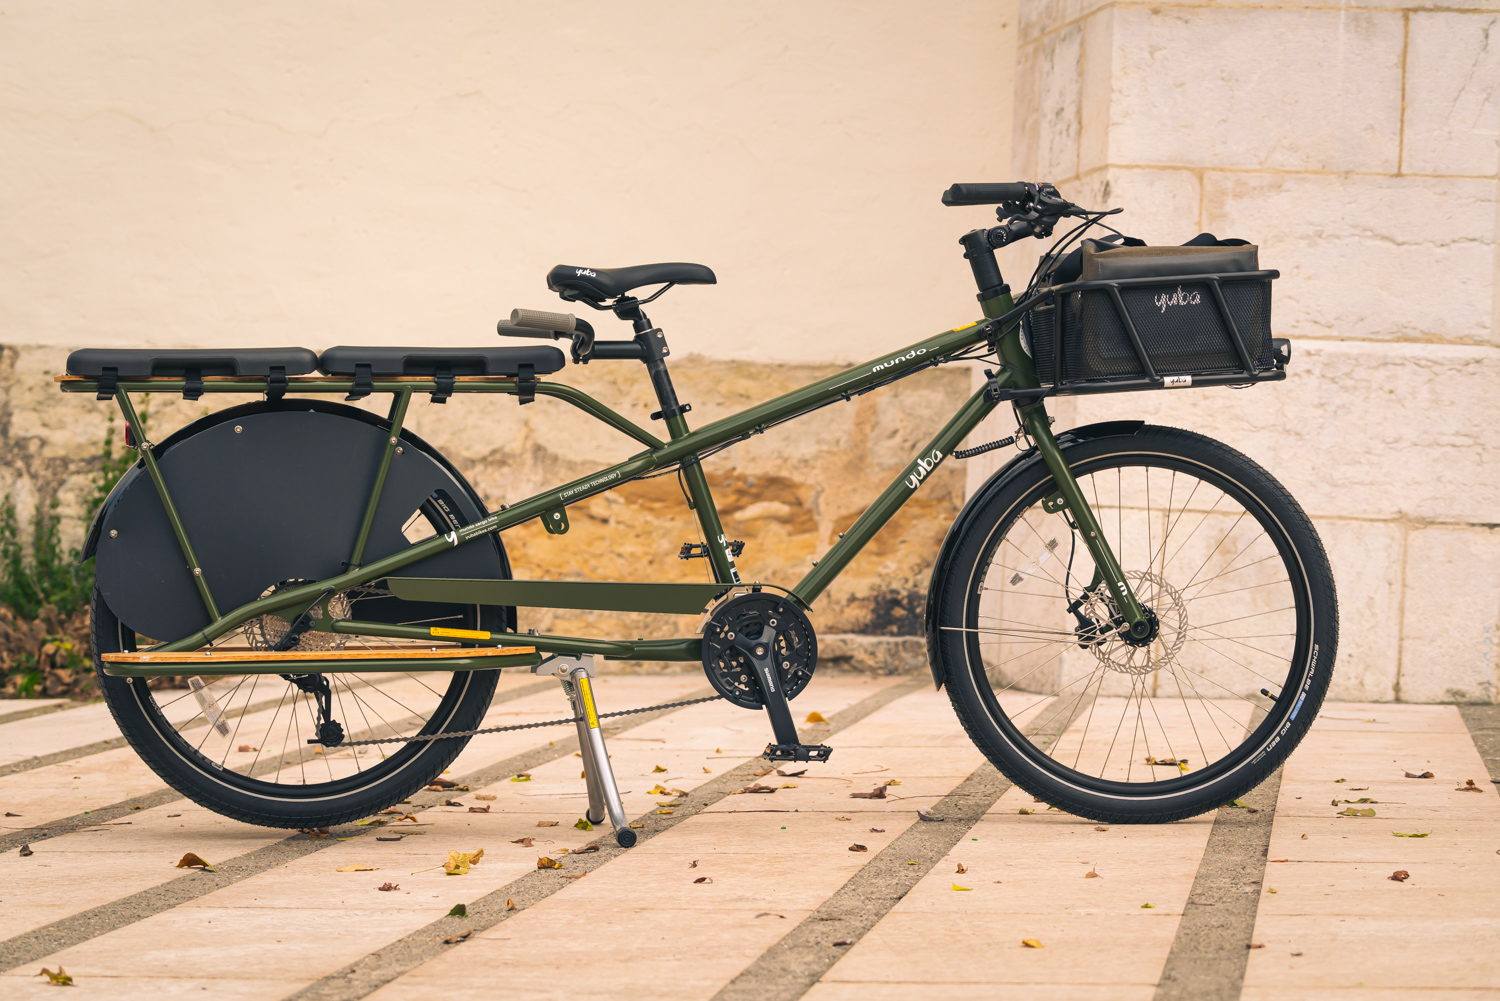 yuba-bikes-mundolux-olive-fall-city-sideview-sideboards-breadbasket-grab-go.jpg